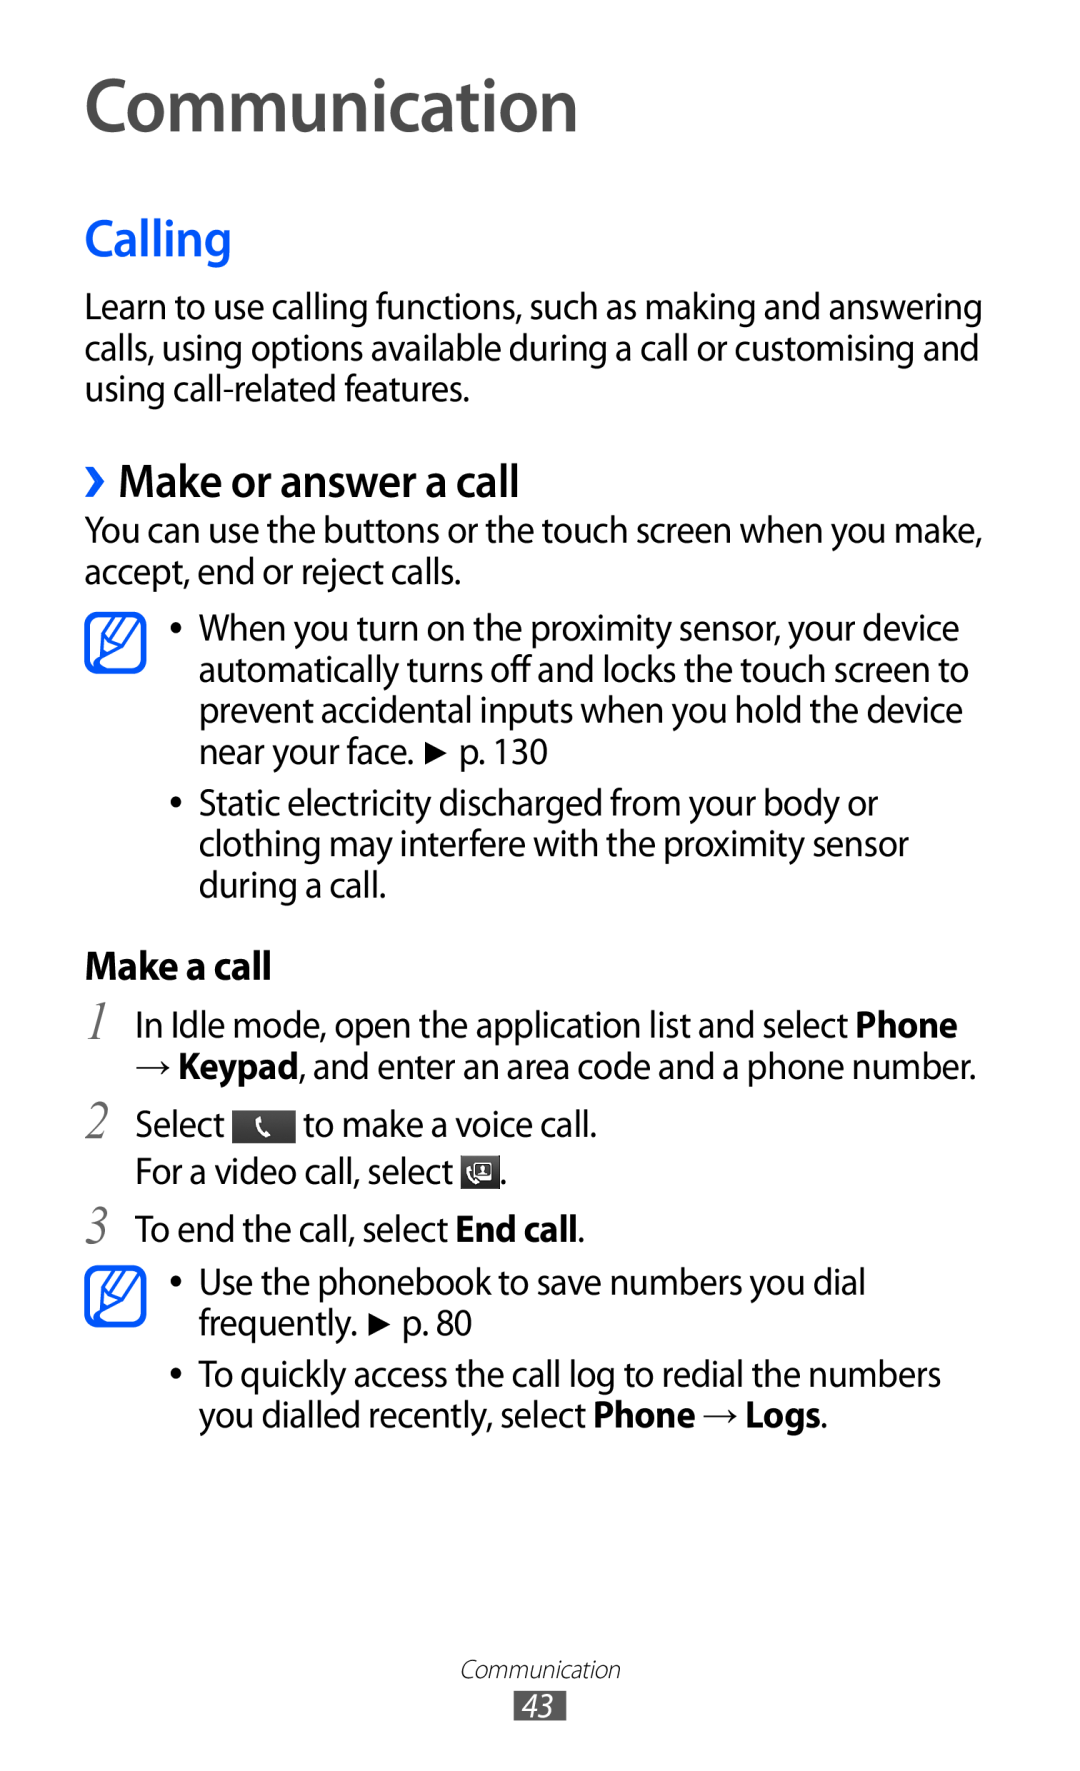 Samsung GT-I9070 user manual Communication, Calling, ››Make or answer a call, Make a call 